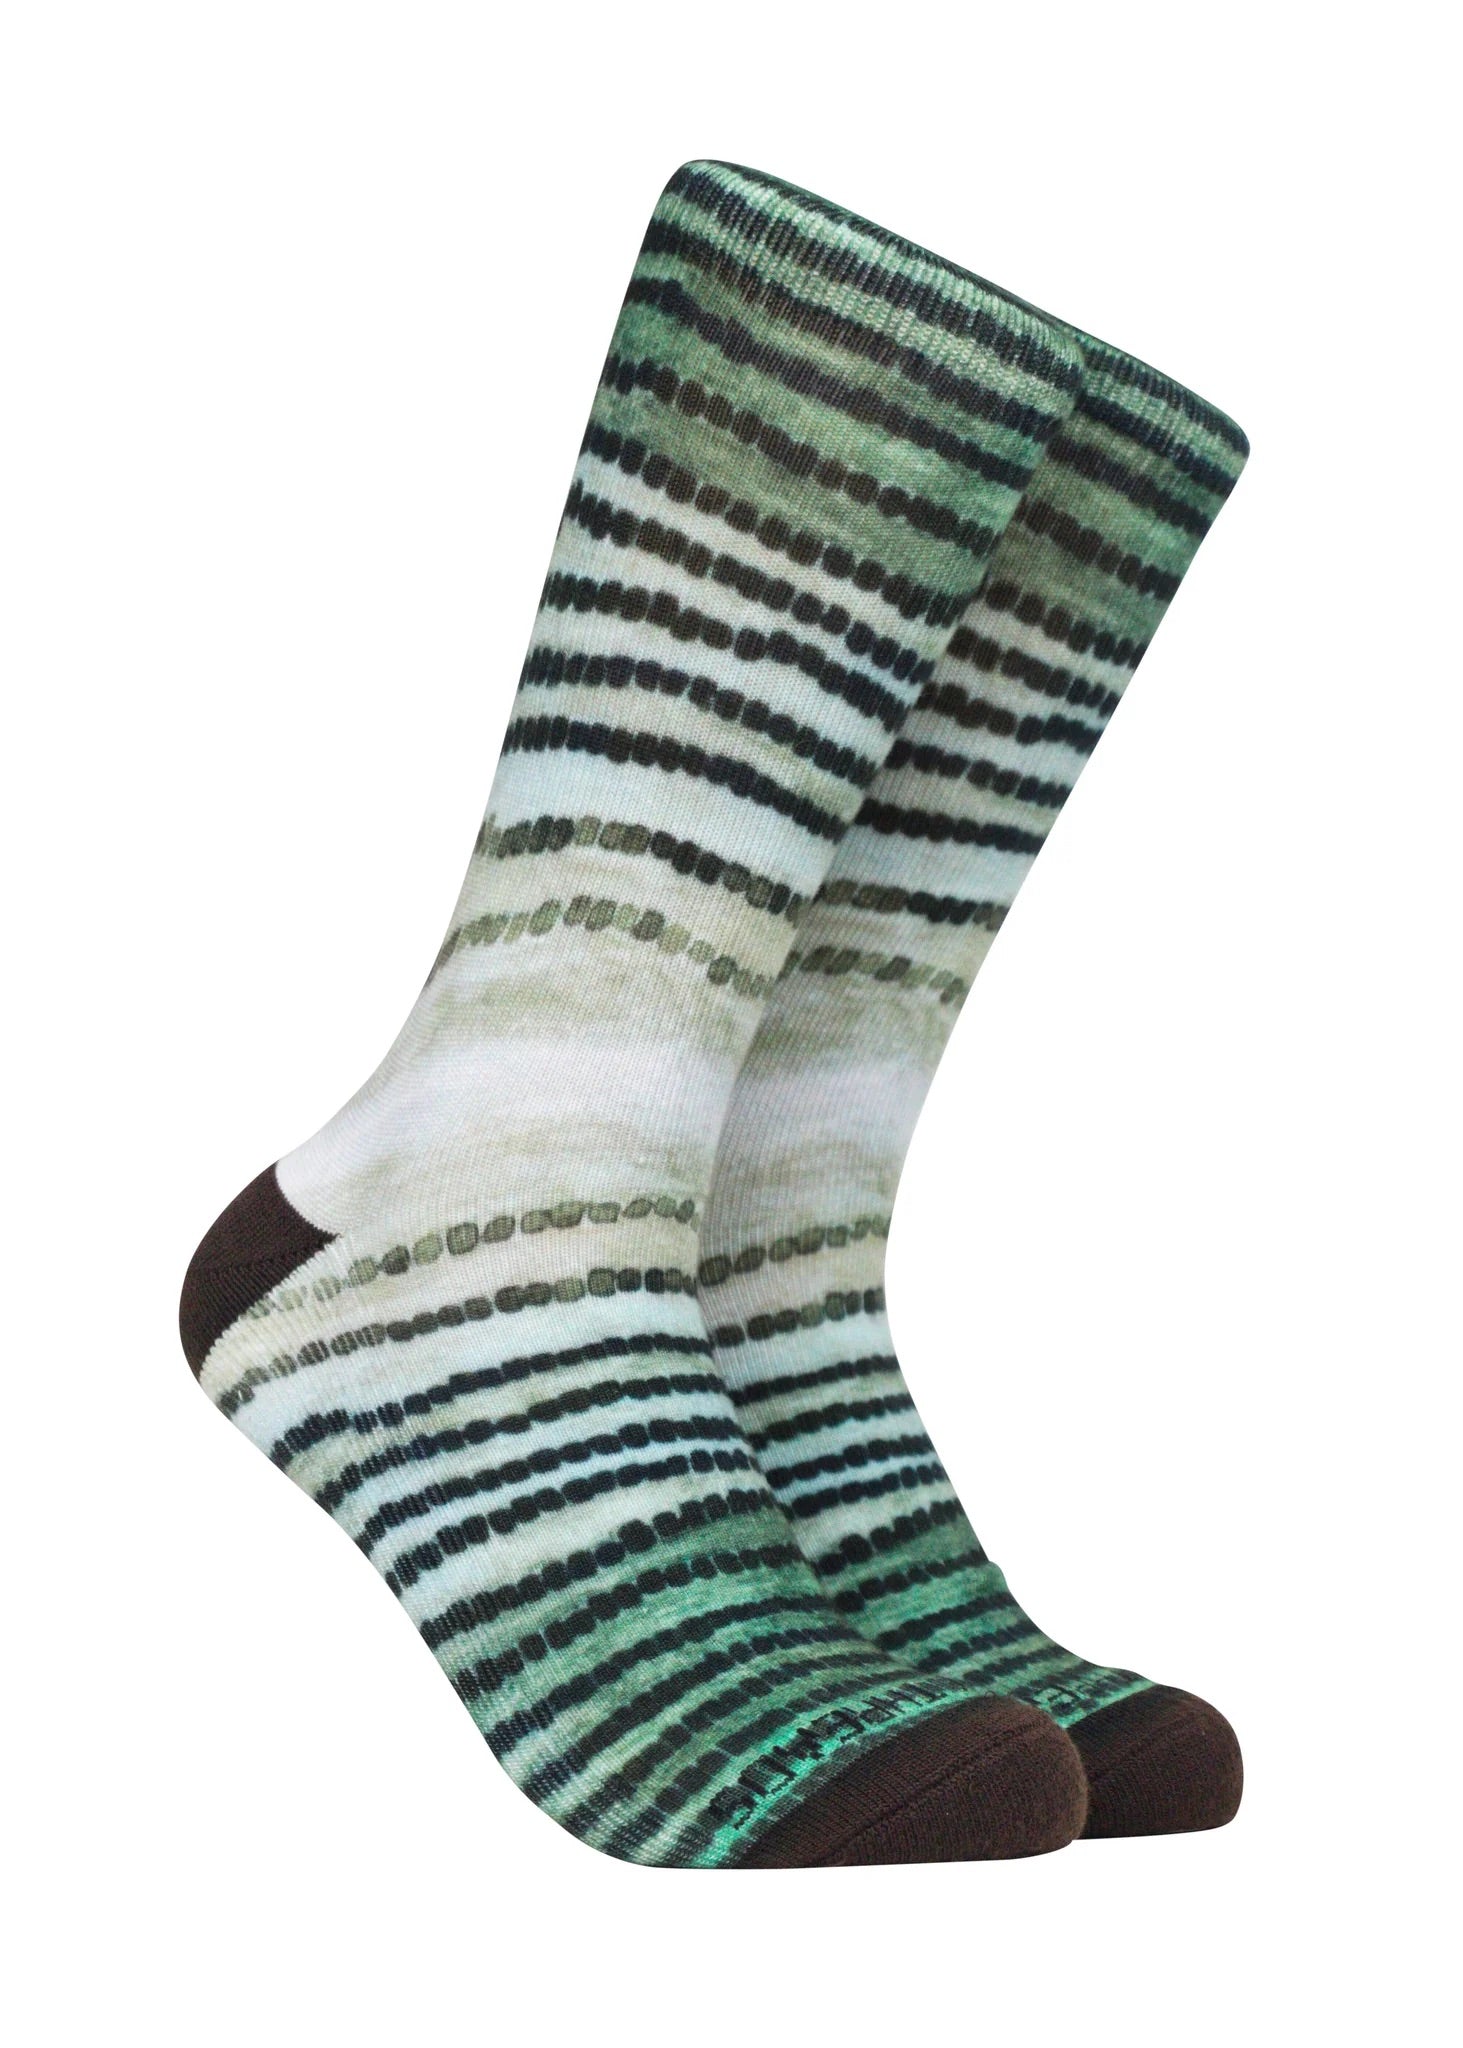 Reel Threads - Socks